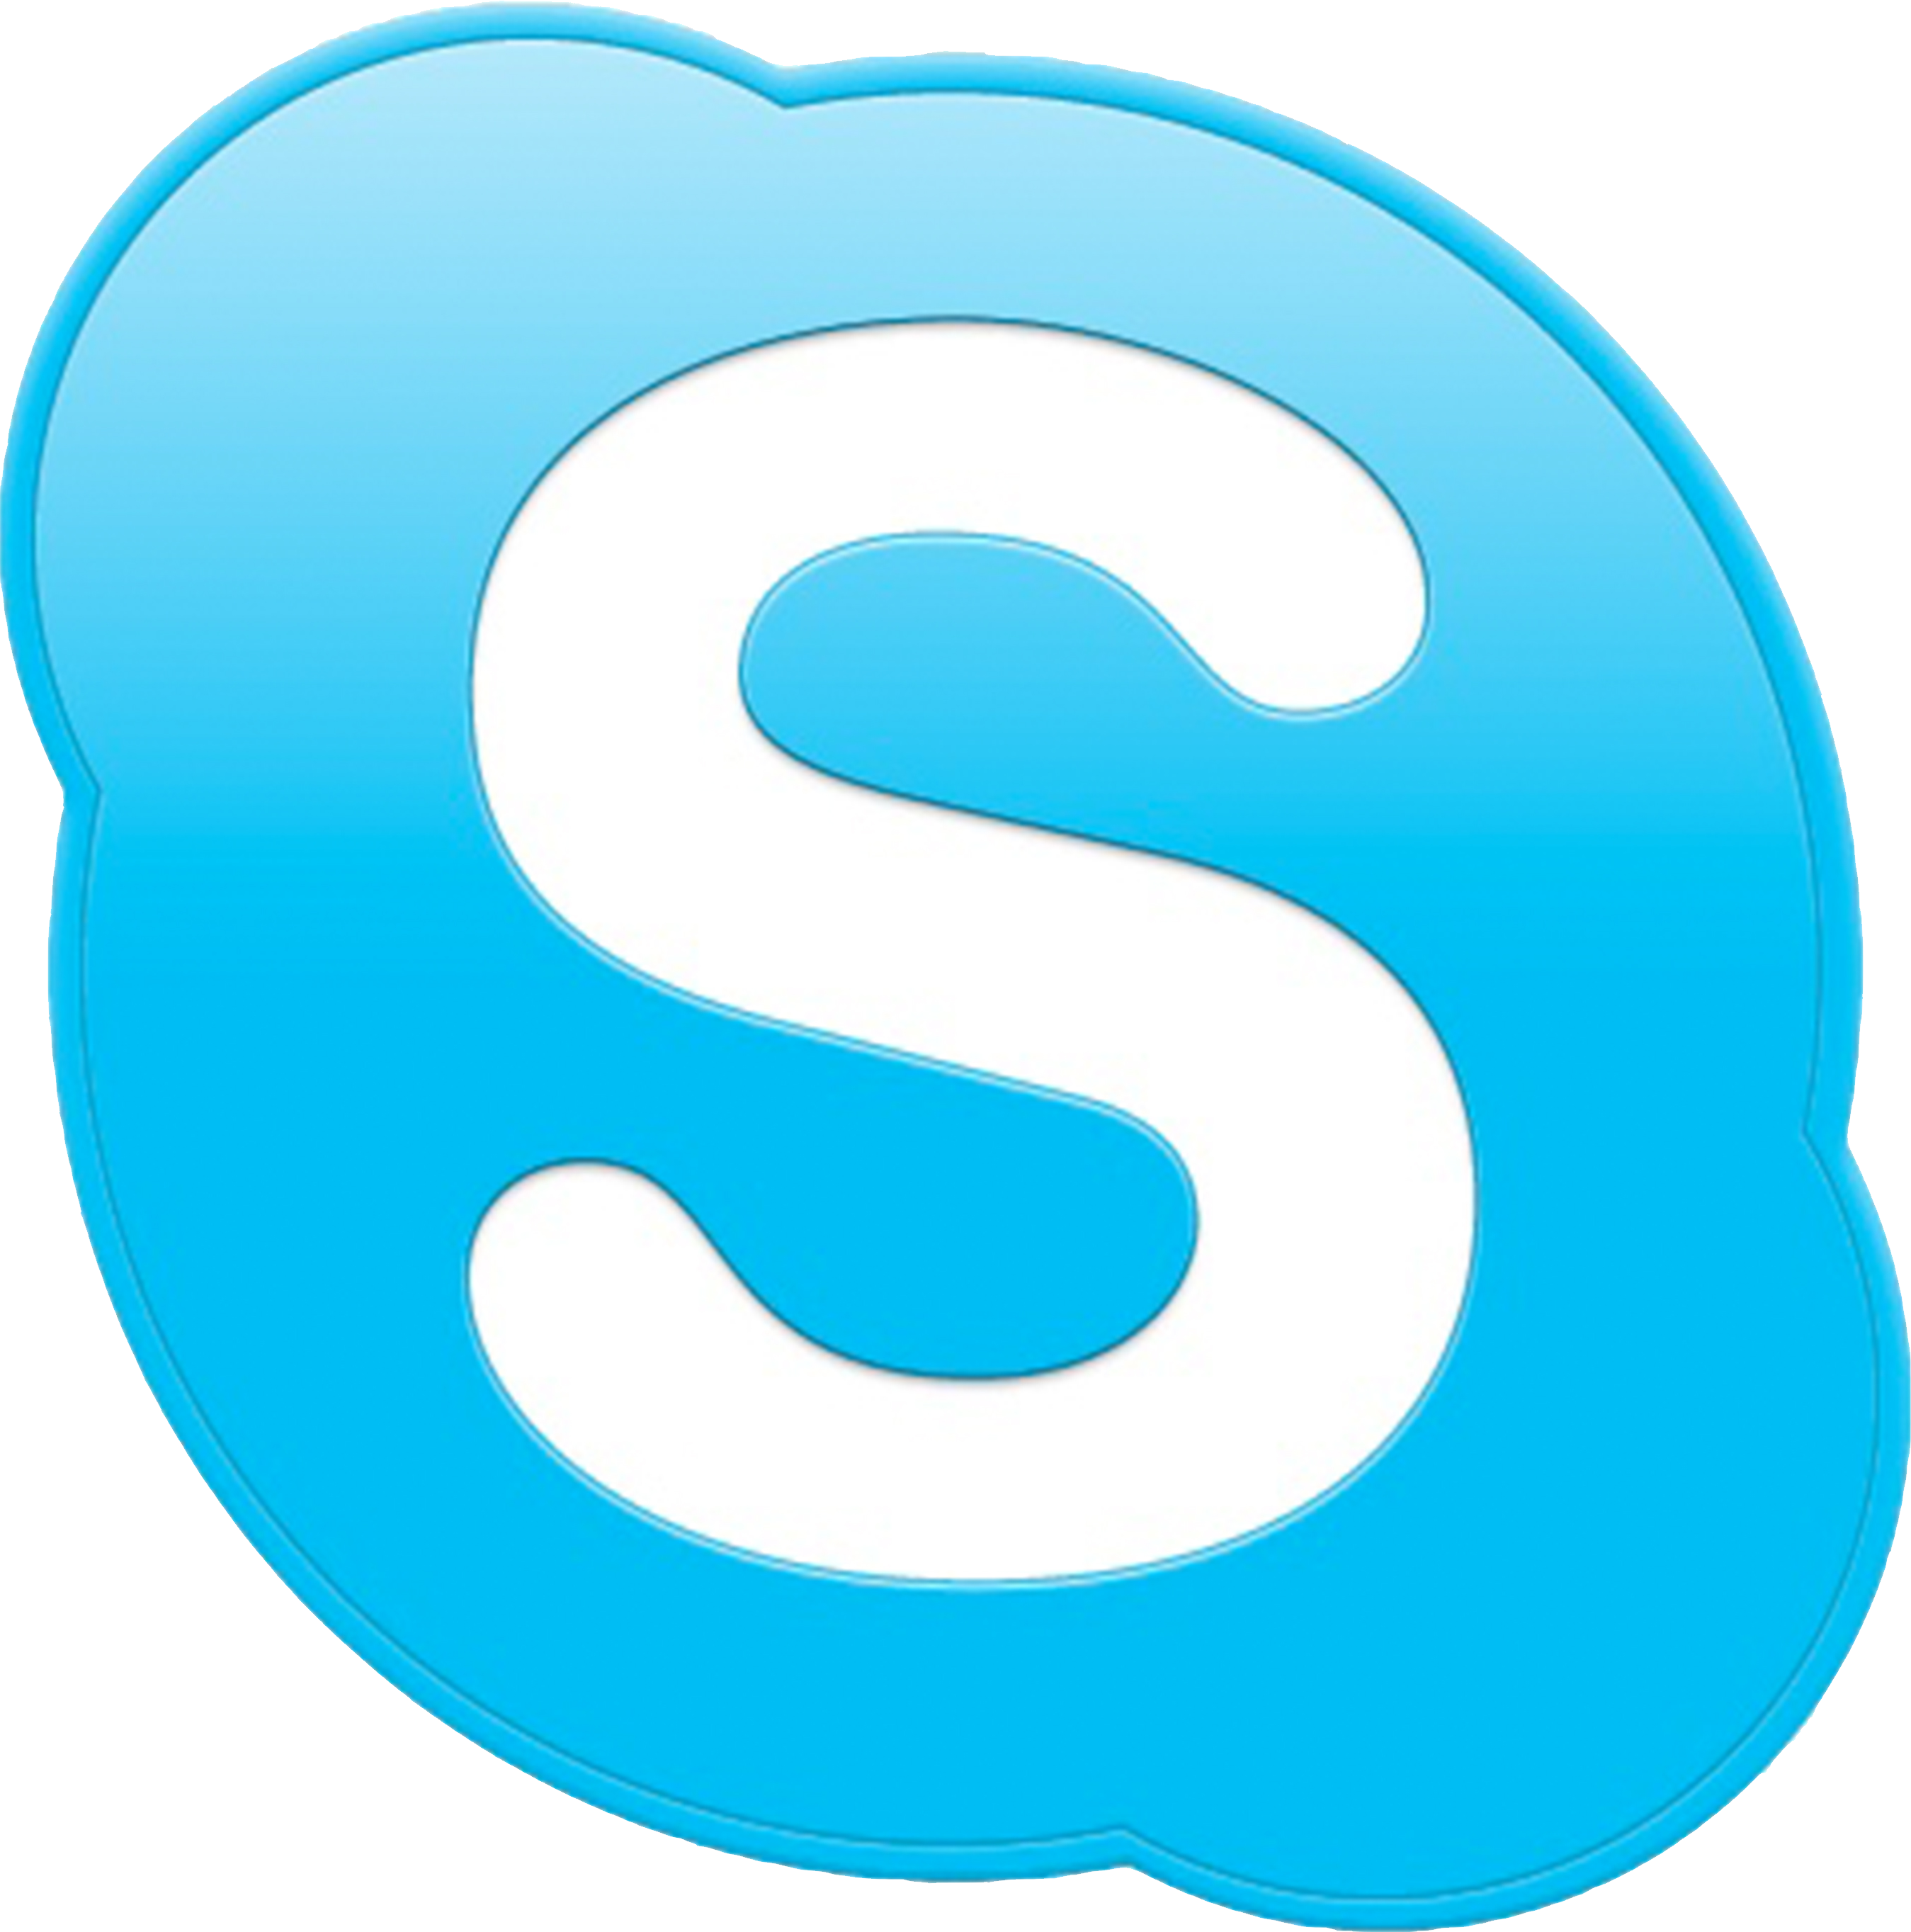 Skype bubble icon